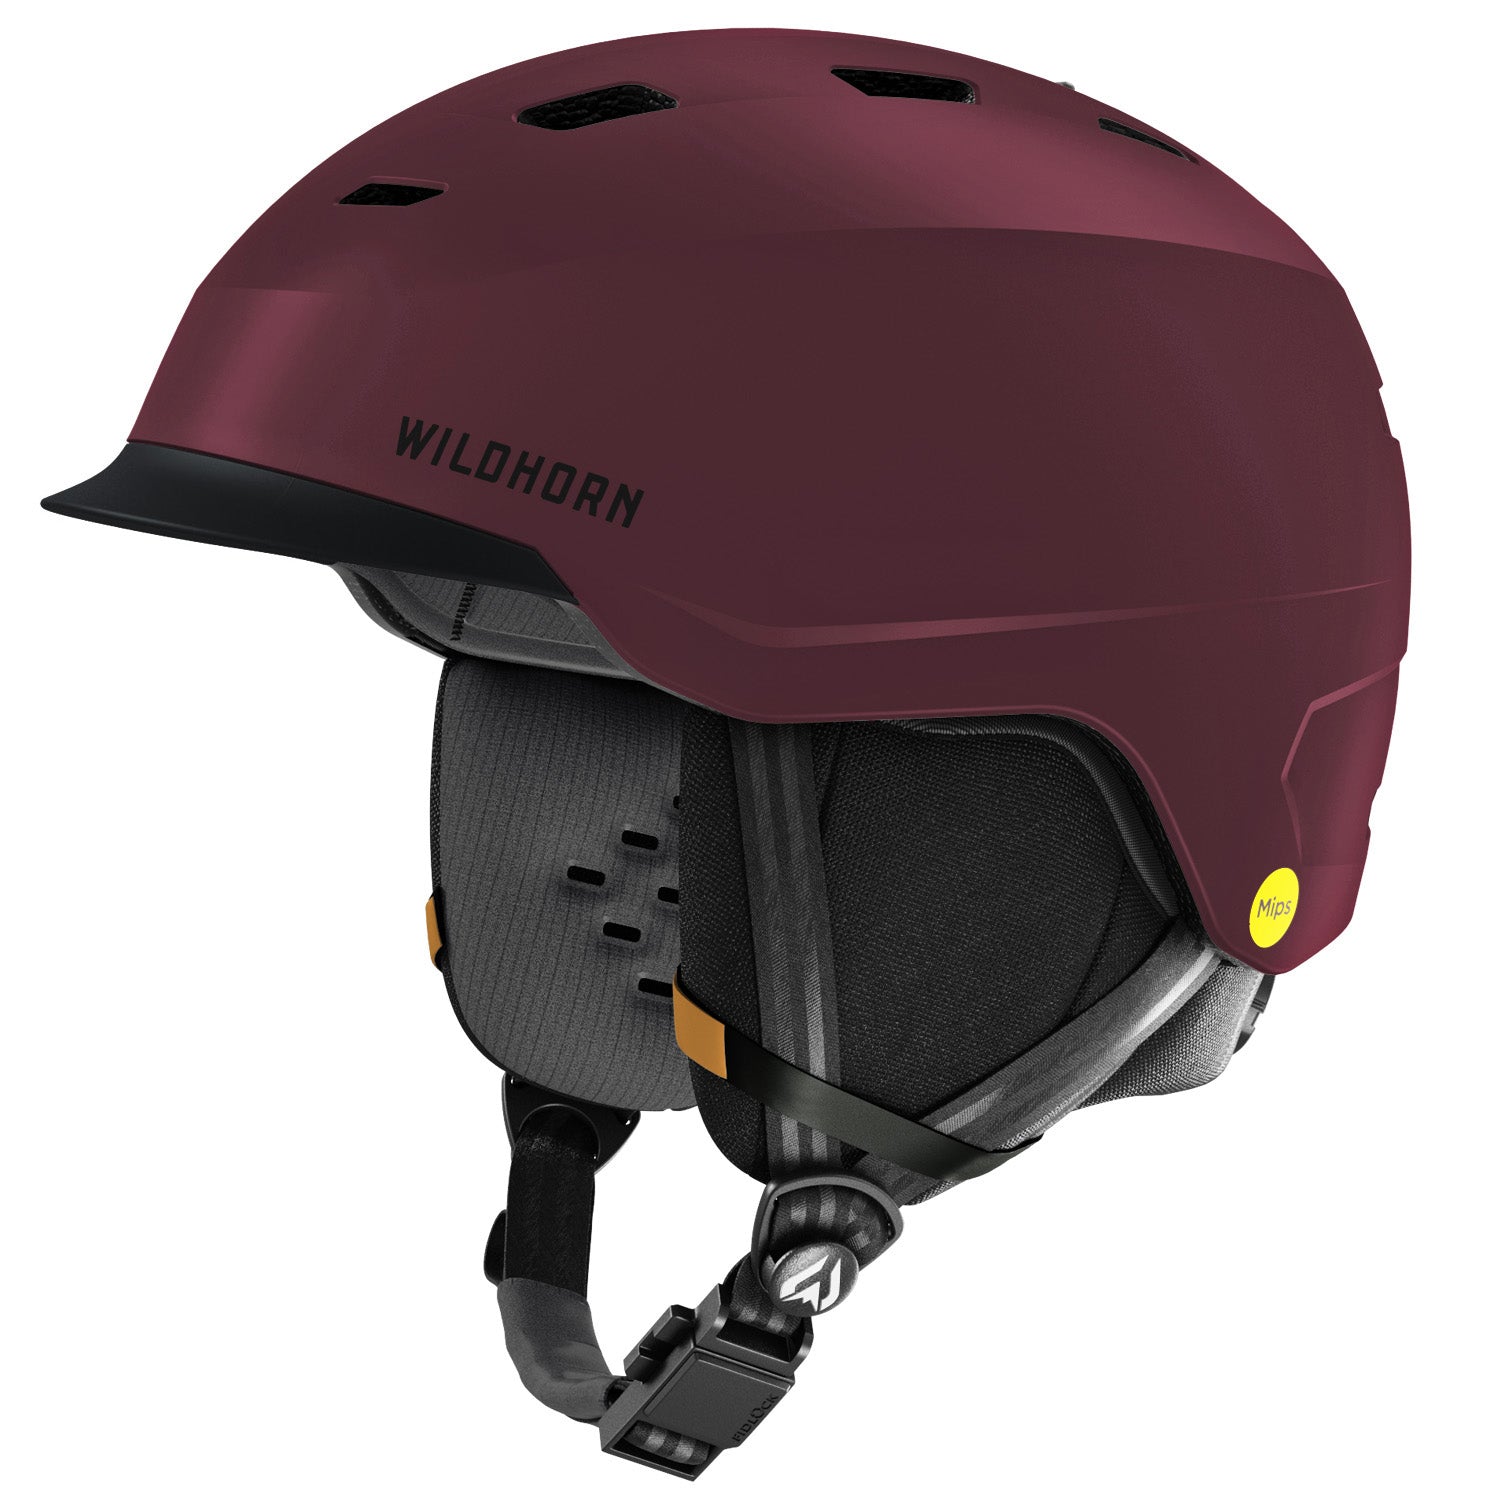 Drift Pro Mips Unisex Snow Helmet